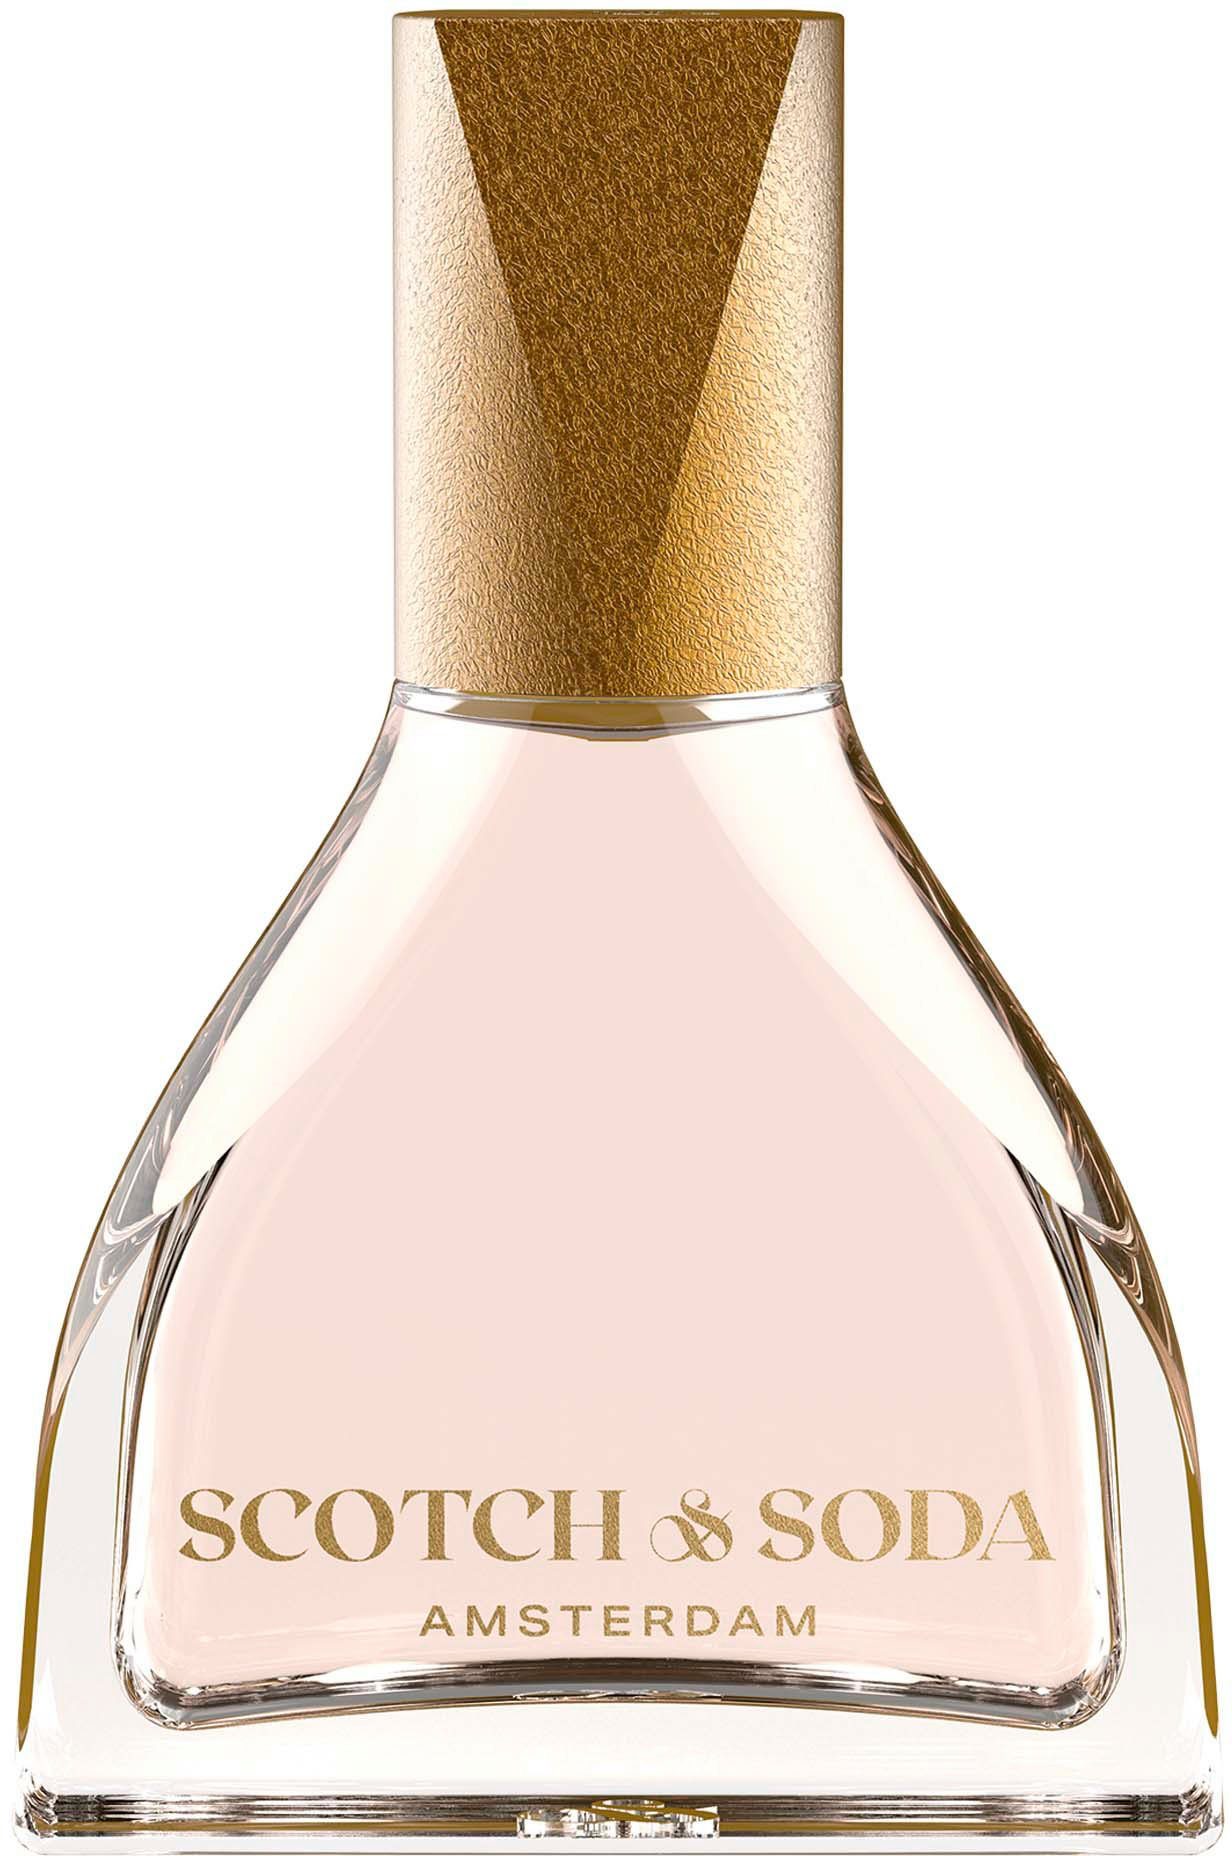 Scotch de Women AM Parfum & Eau Soda I